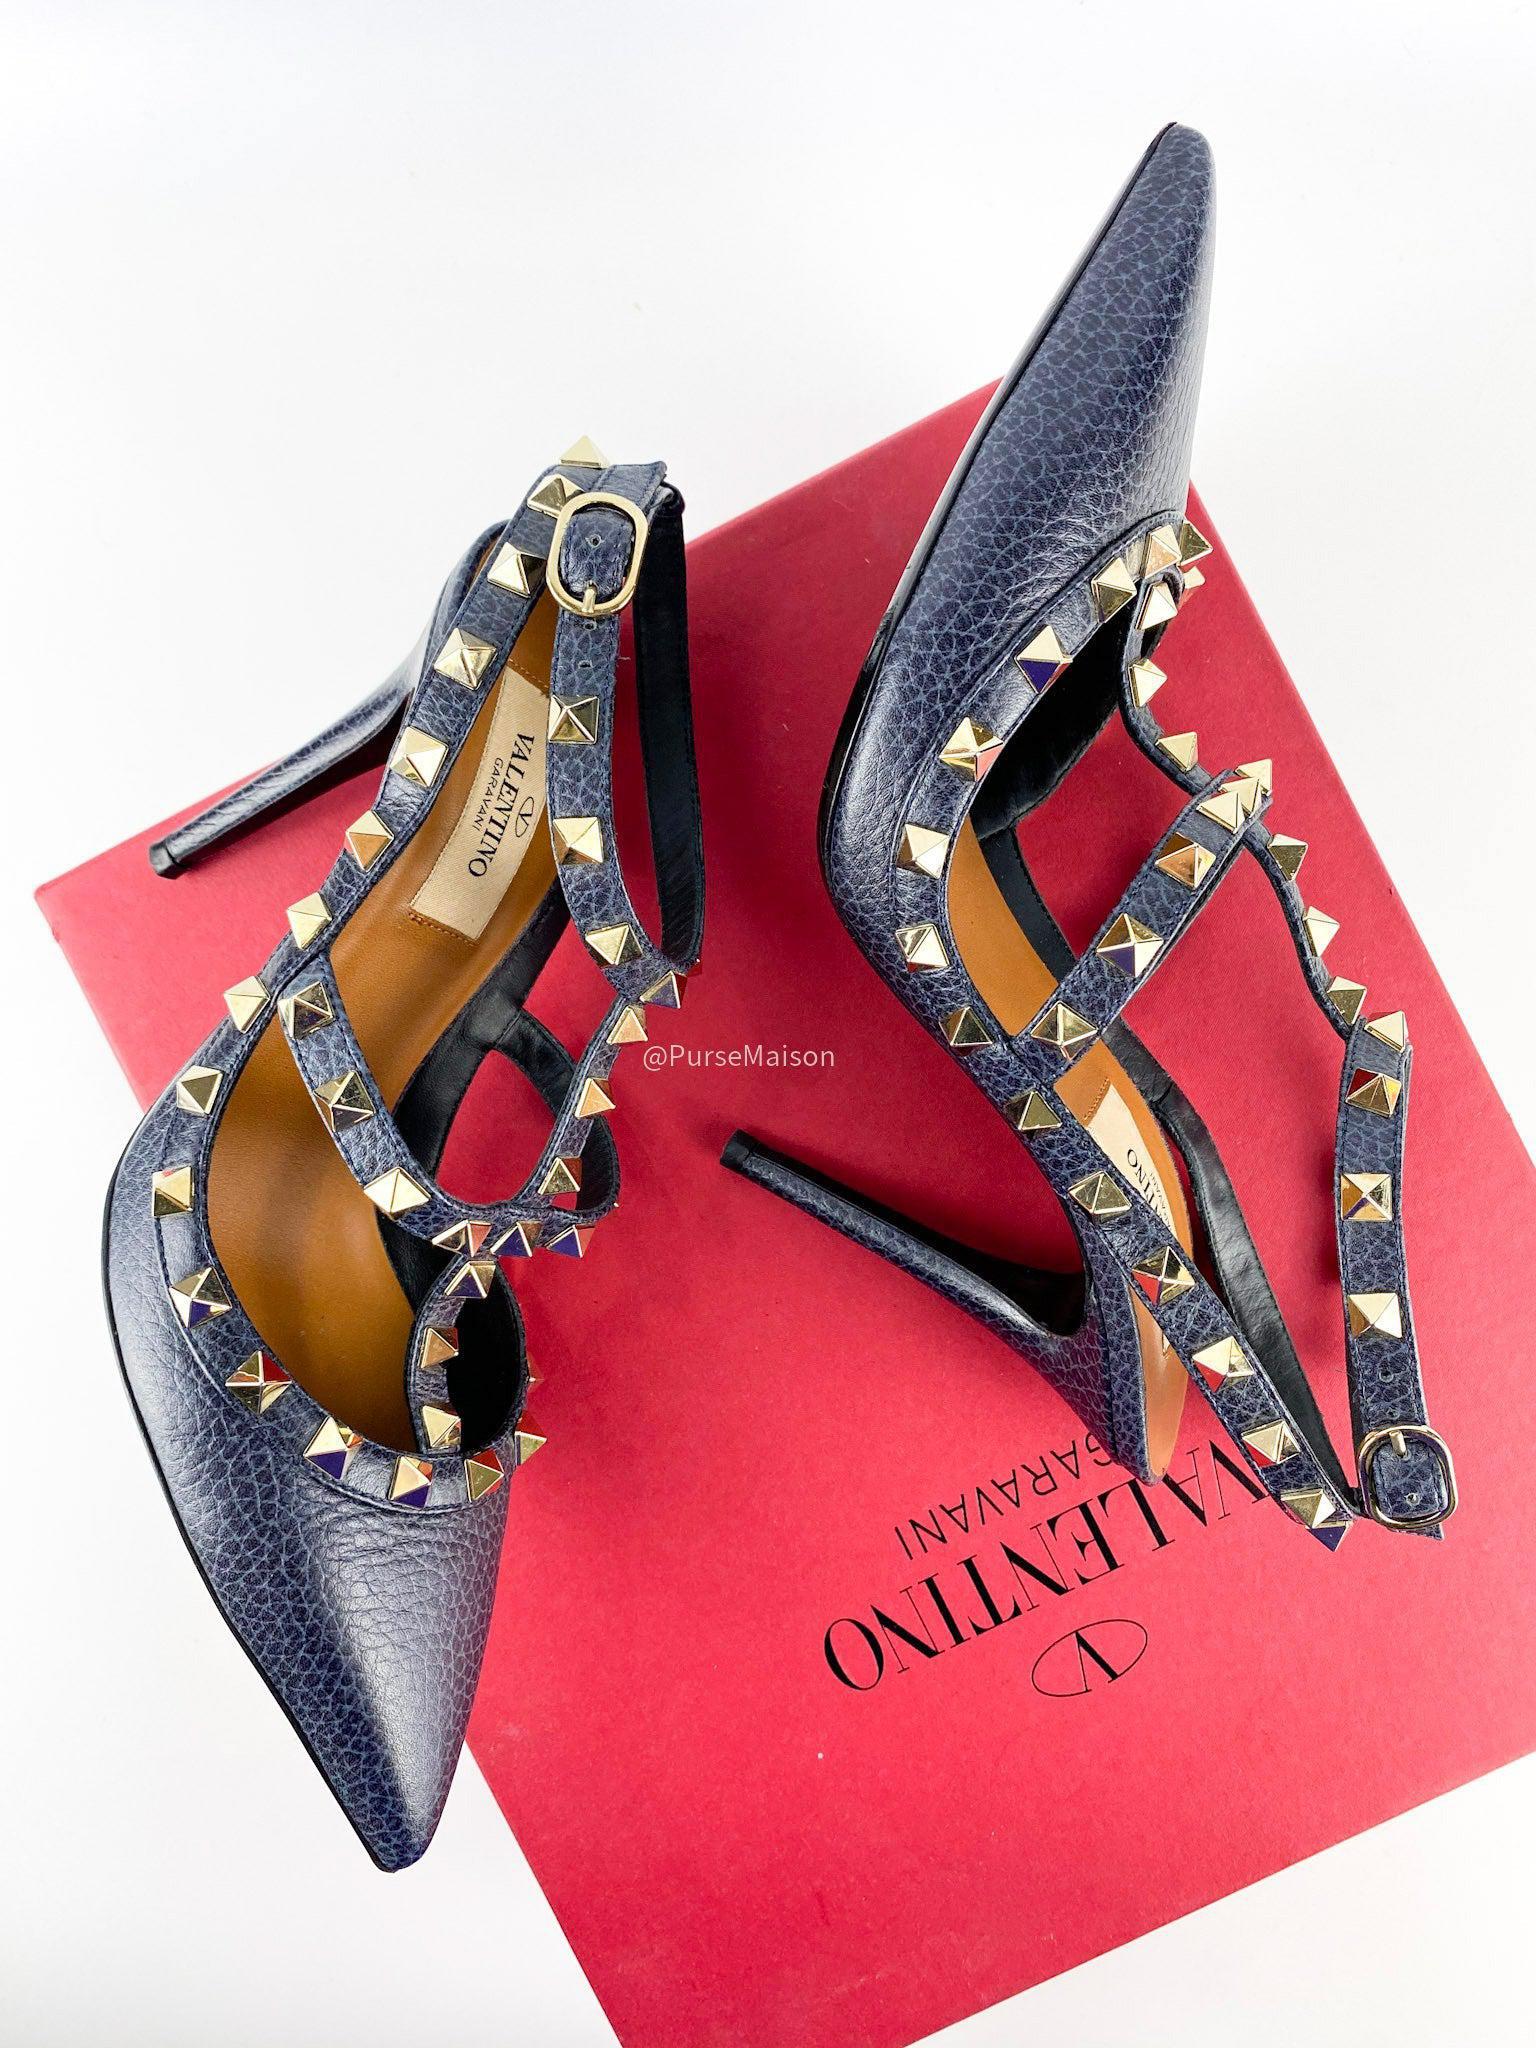 Valentino Garavani Rockstud High heels Ankle Strap size 37EU (24.5cm)